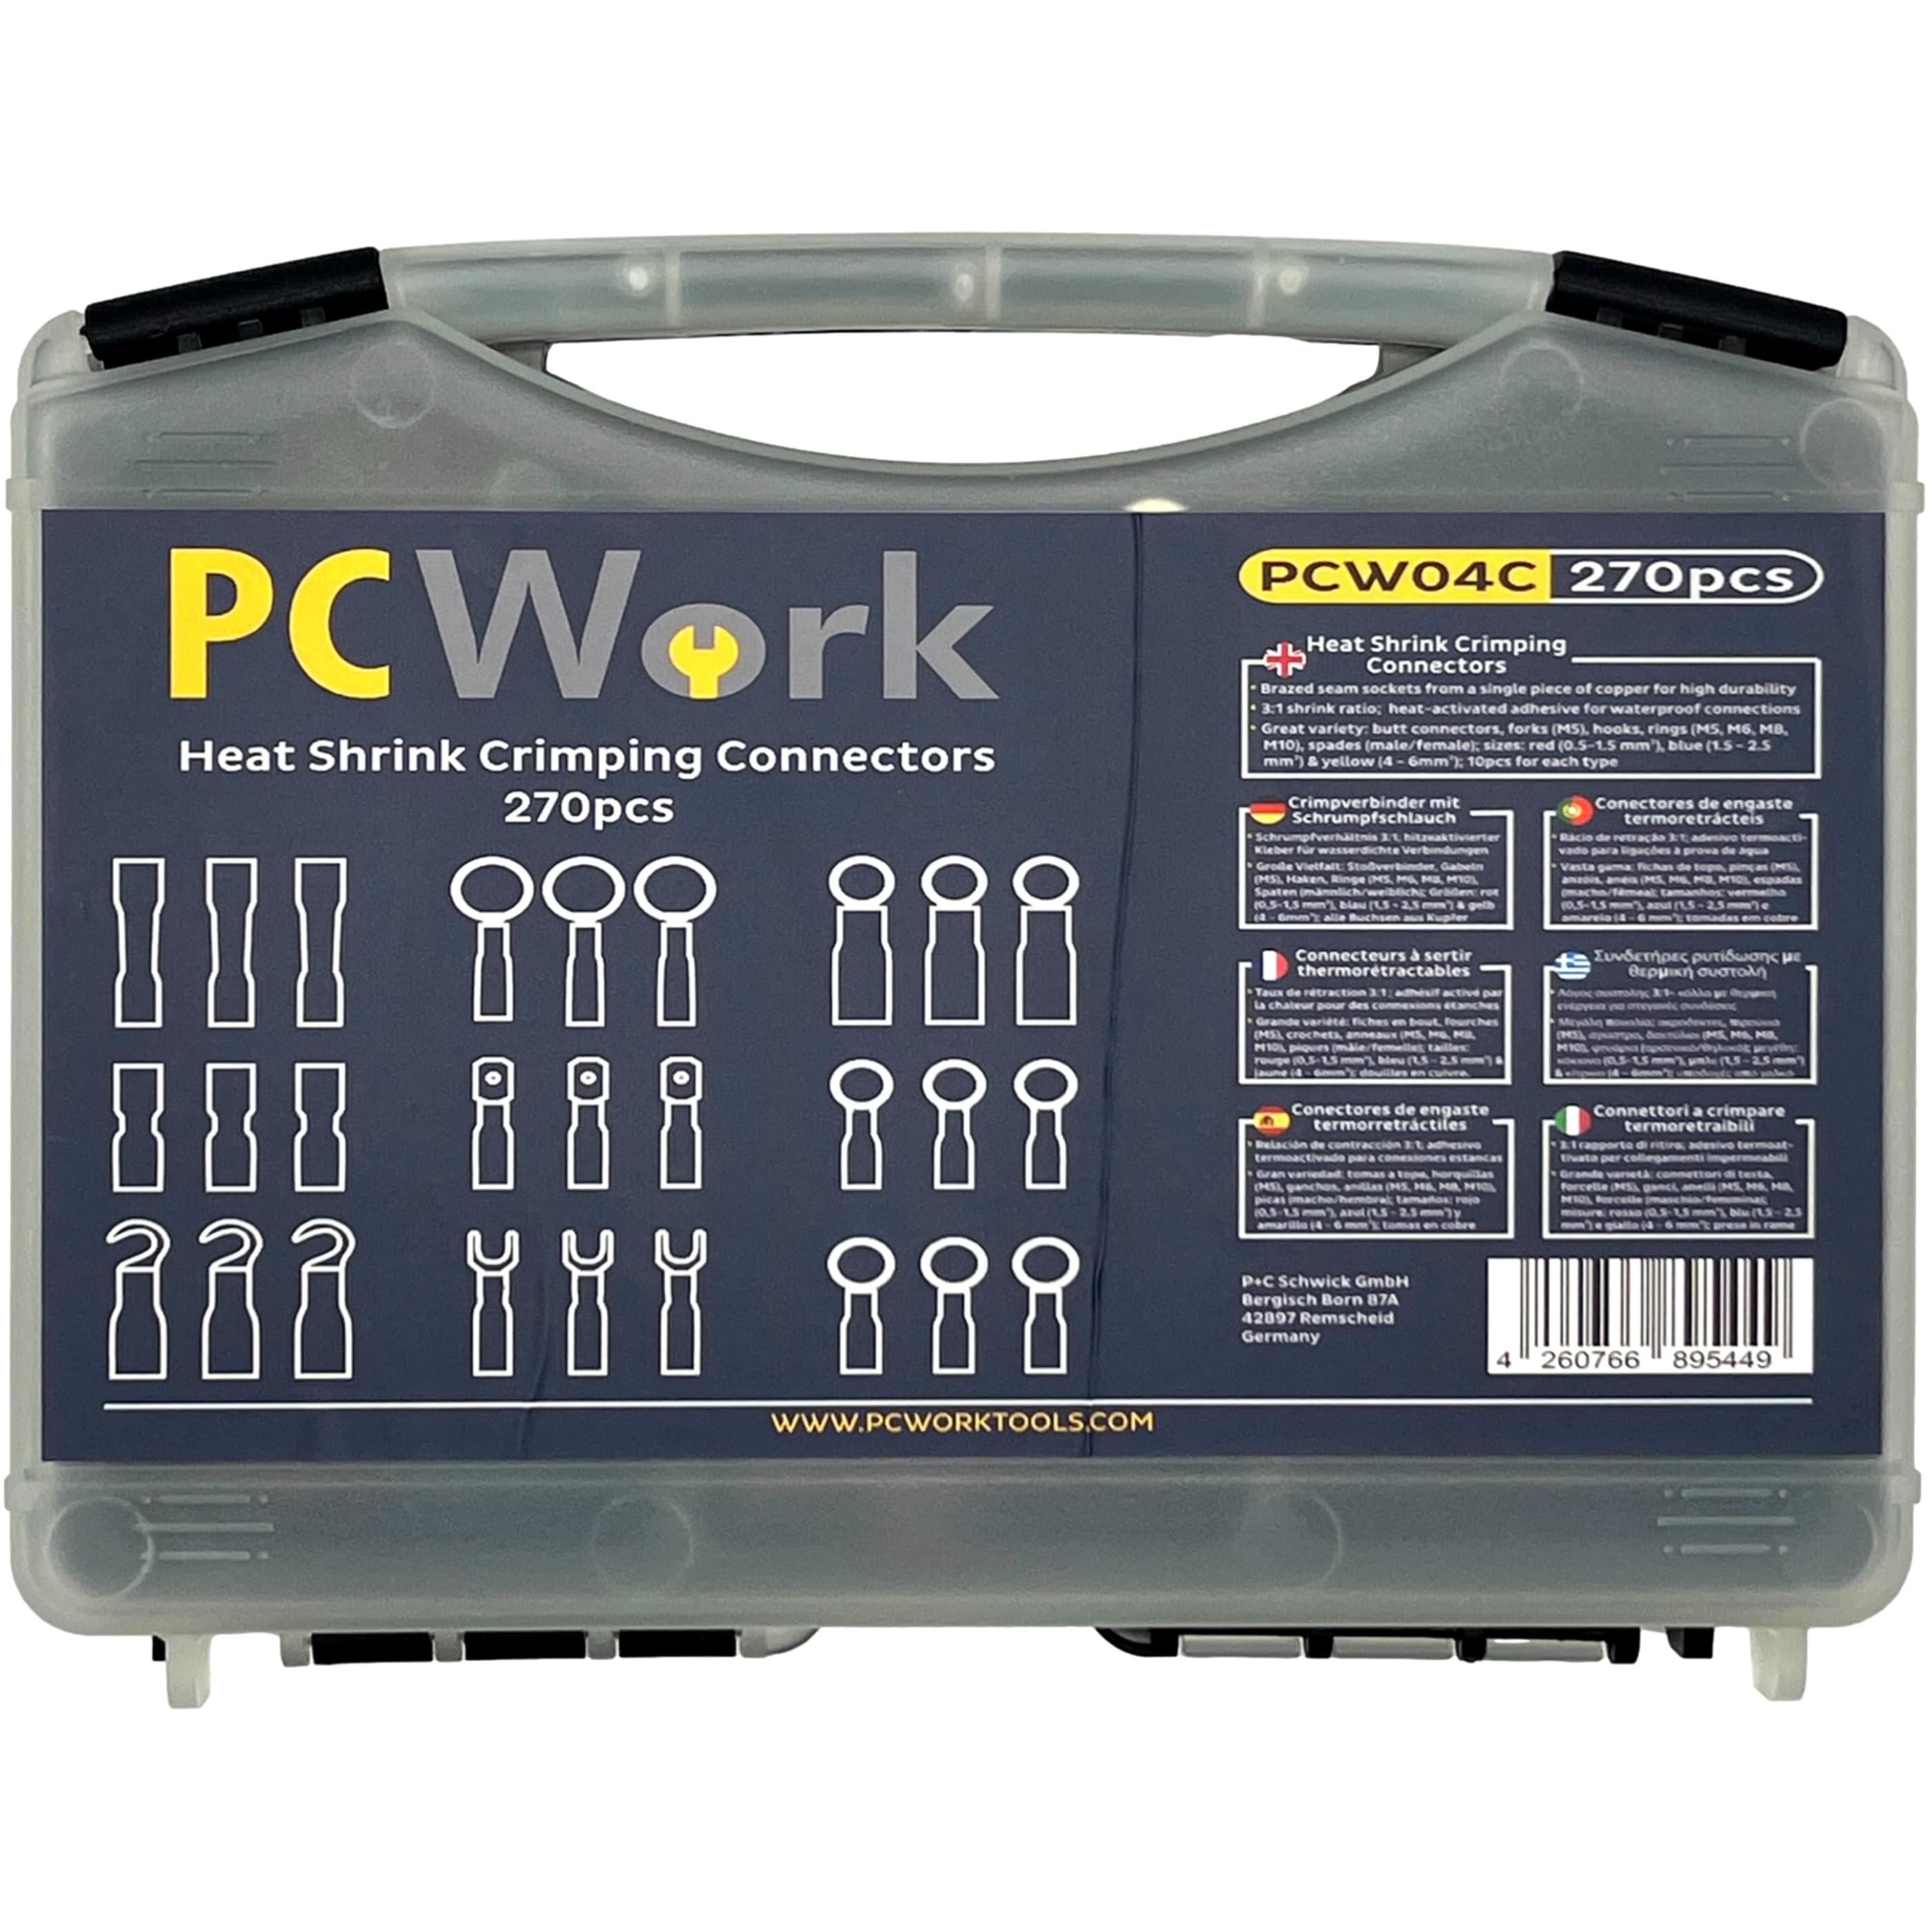 PCWork Tools Home - PCWork Tools